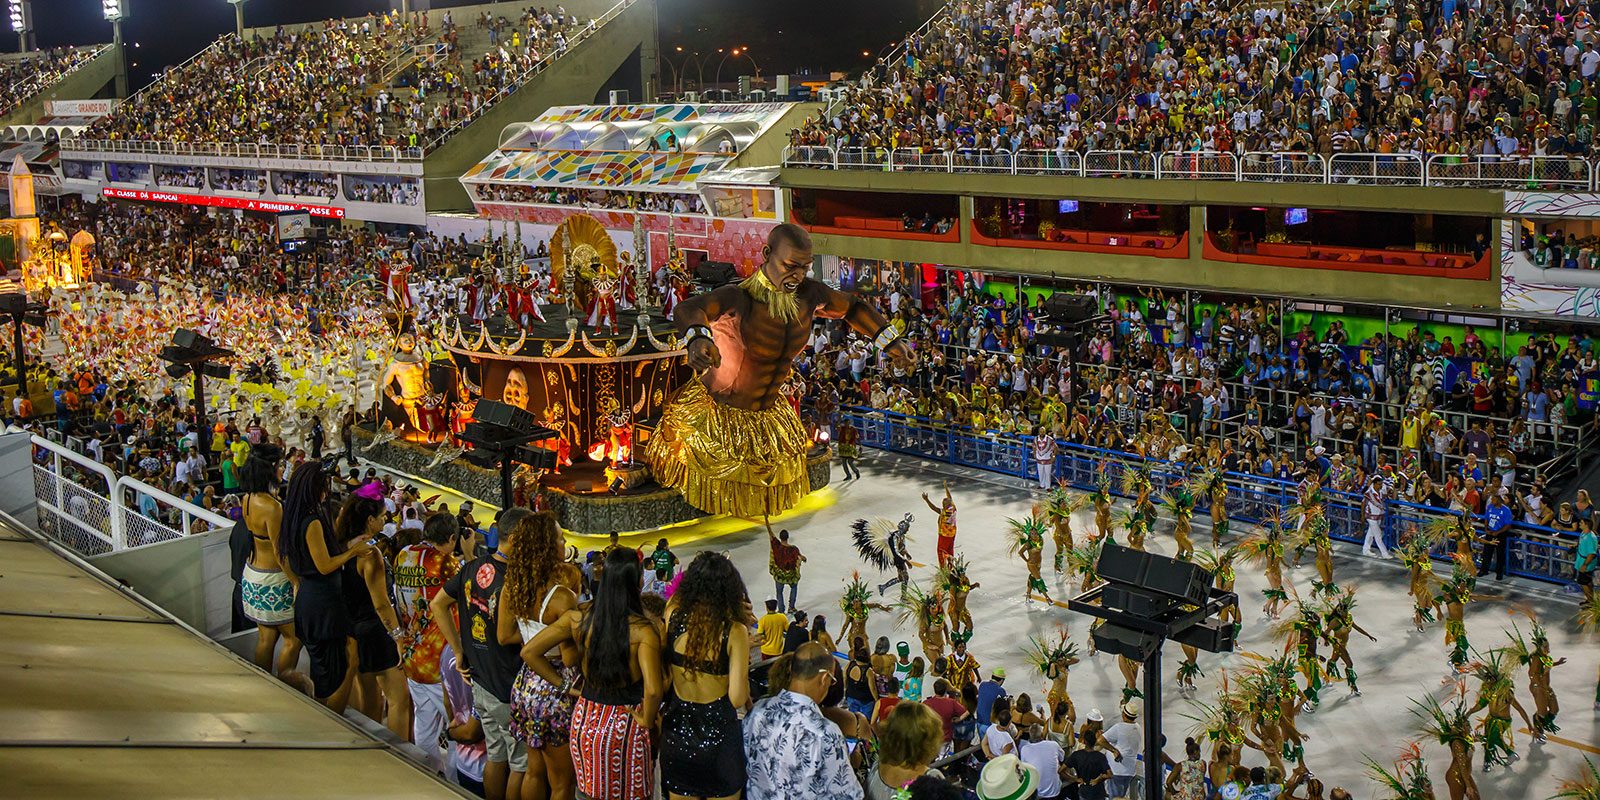 https://www.newyorklatinculture.com/wp-content/uploads/2020/02/Rio-Carnival-Sambadrome-RemusM-Dreamstime-1600x800-1.jpg